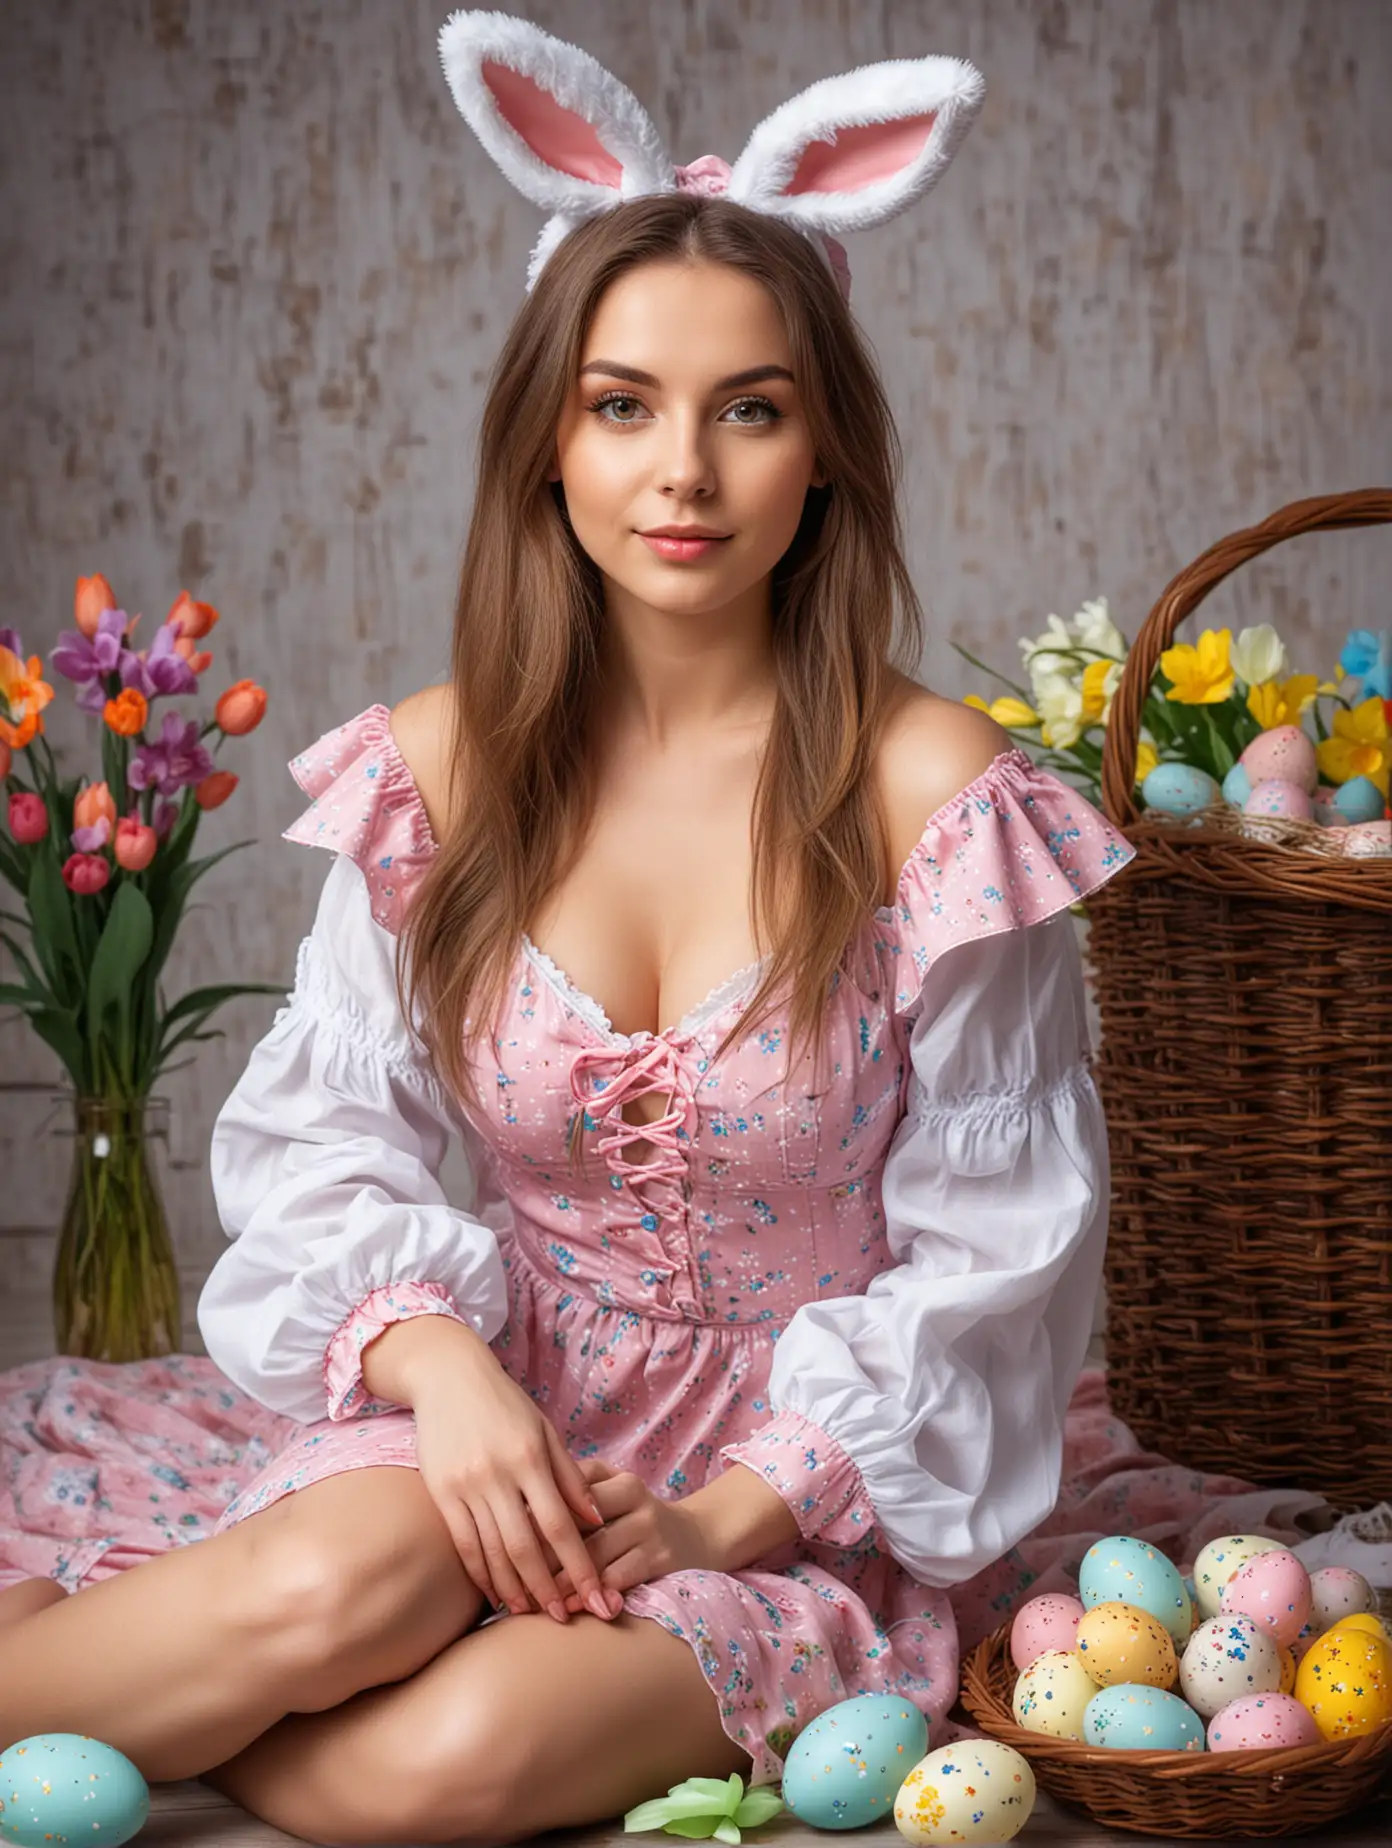 Elegant Ukrainian Woman in Sensual Easter Attire Indoor Easter Photoshoot